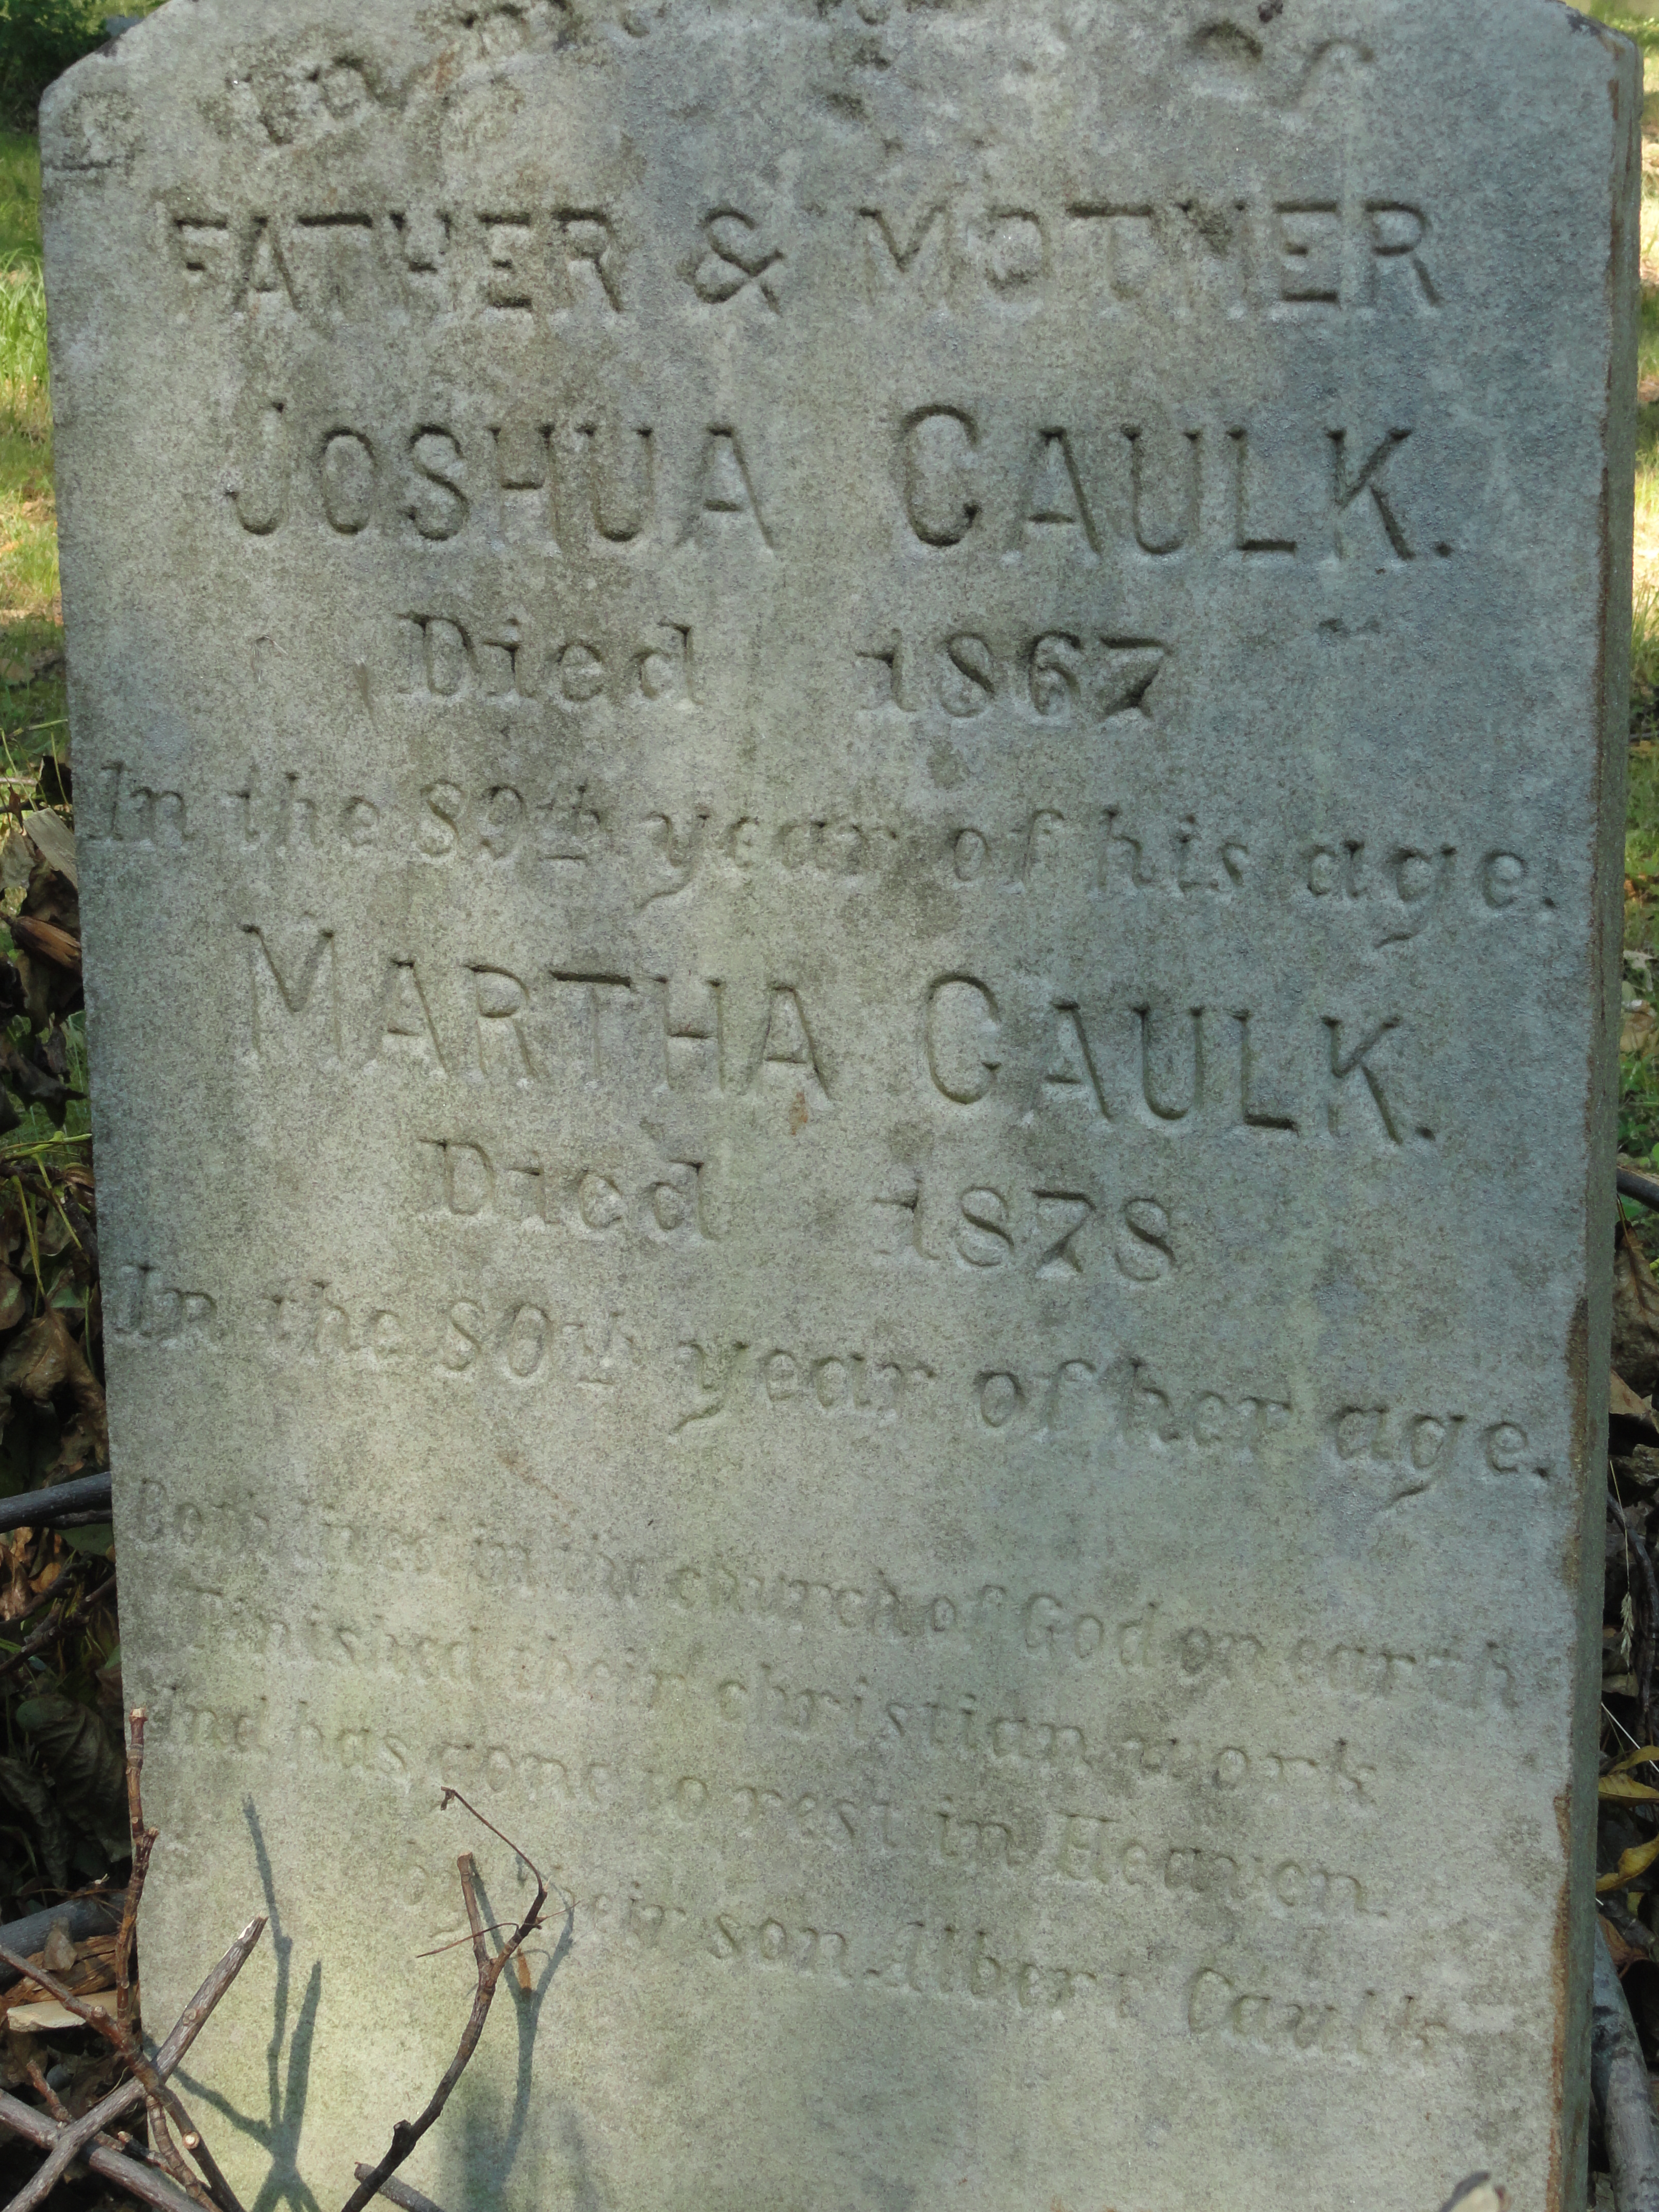 Joshua Caulk gravestone